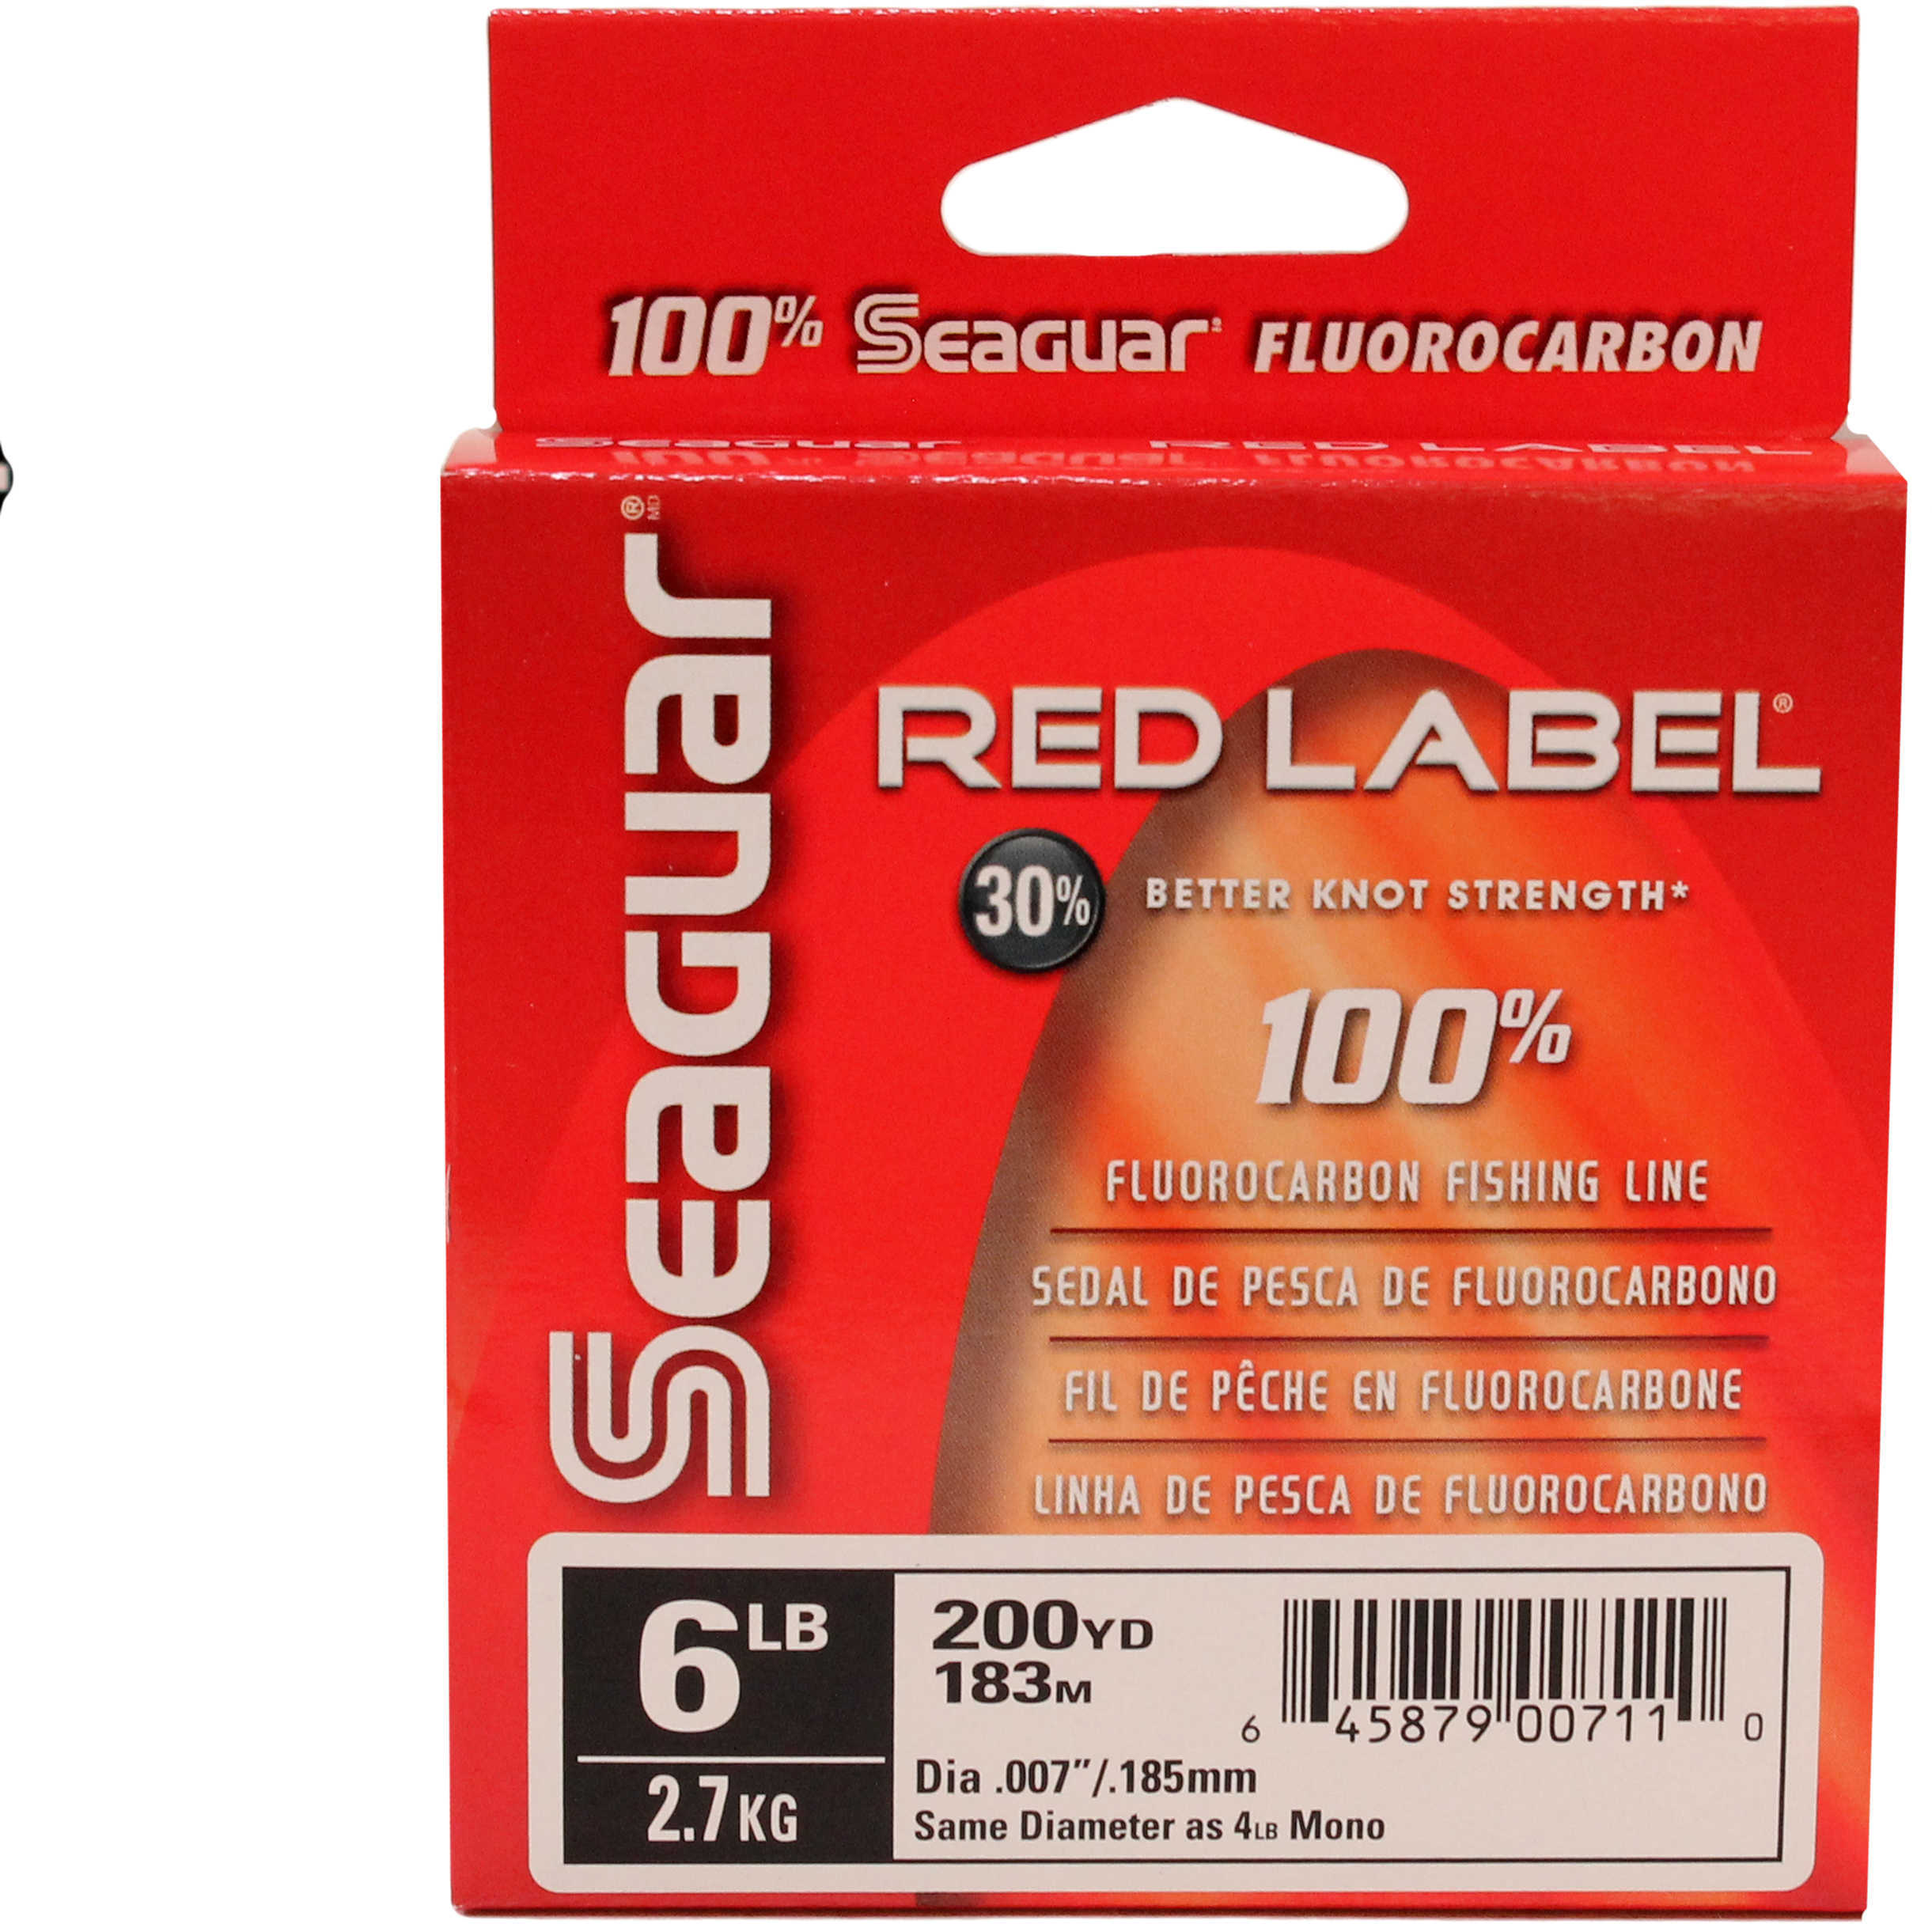 Seaguar Red Label Fluorcarbon Clear 250yds 6Lb Md#: 06Rm-250